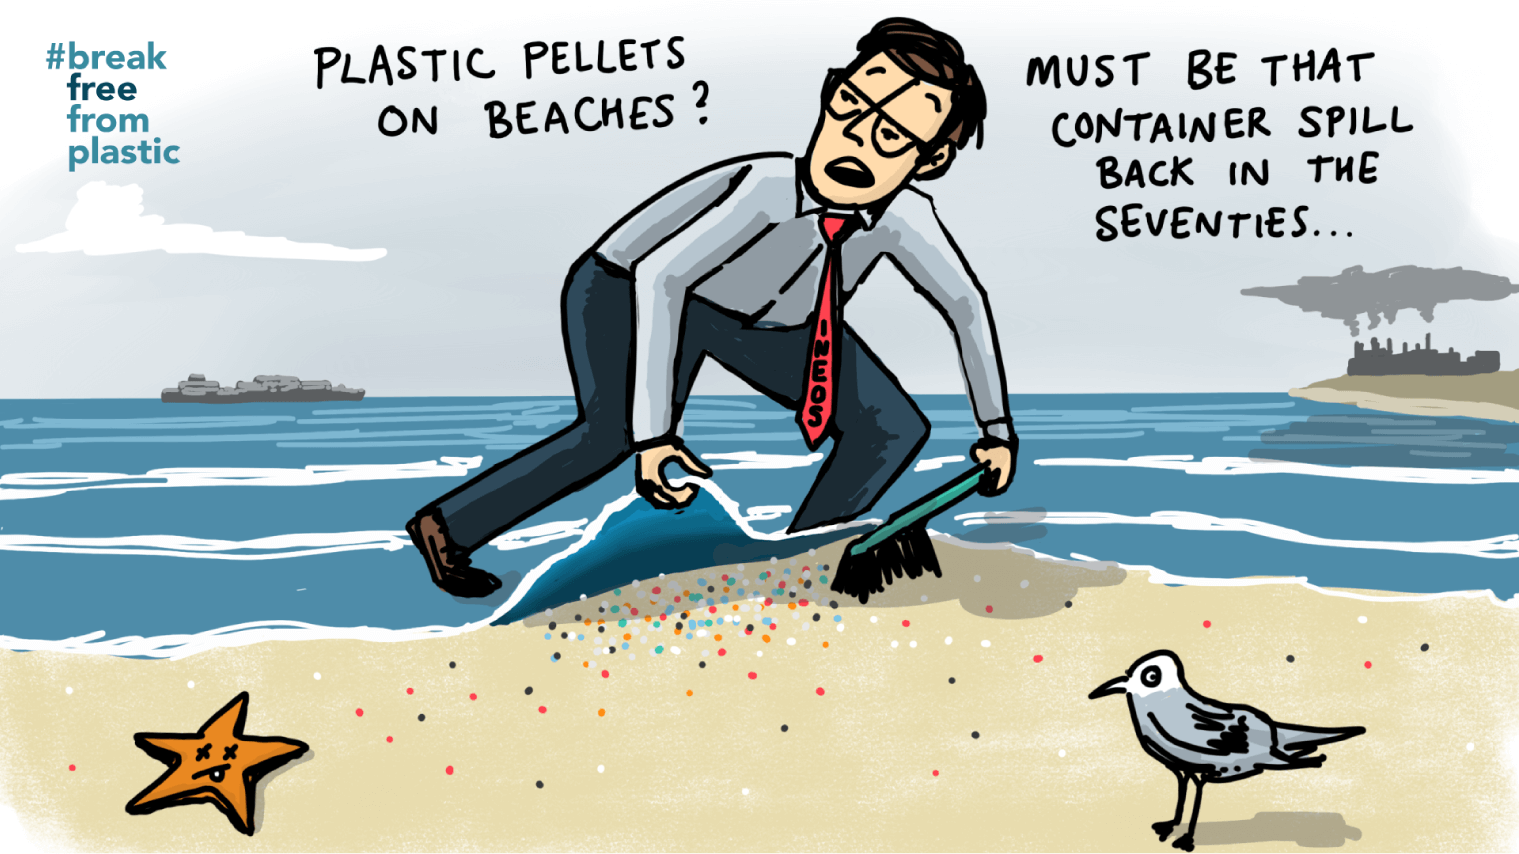 BFFP - Plastic Pellets on Beaches